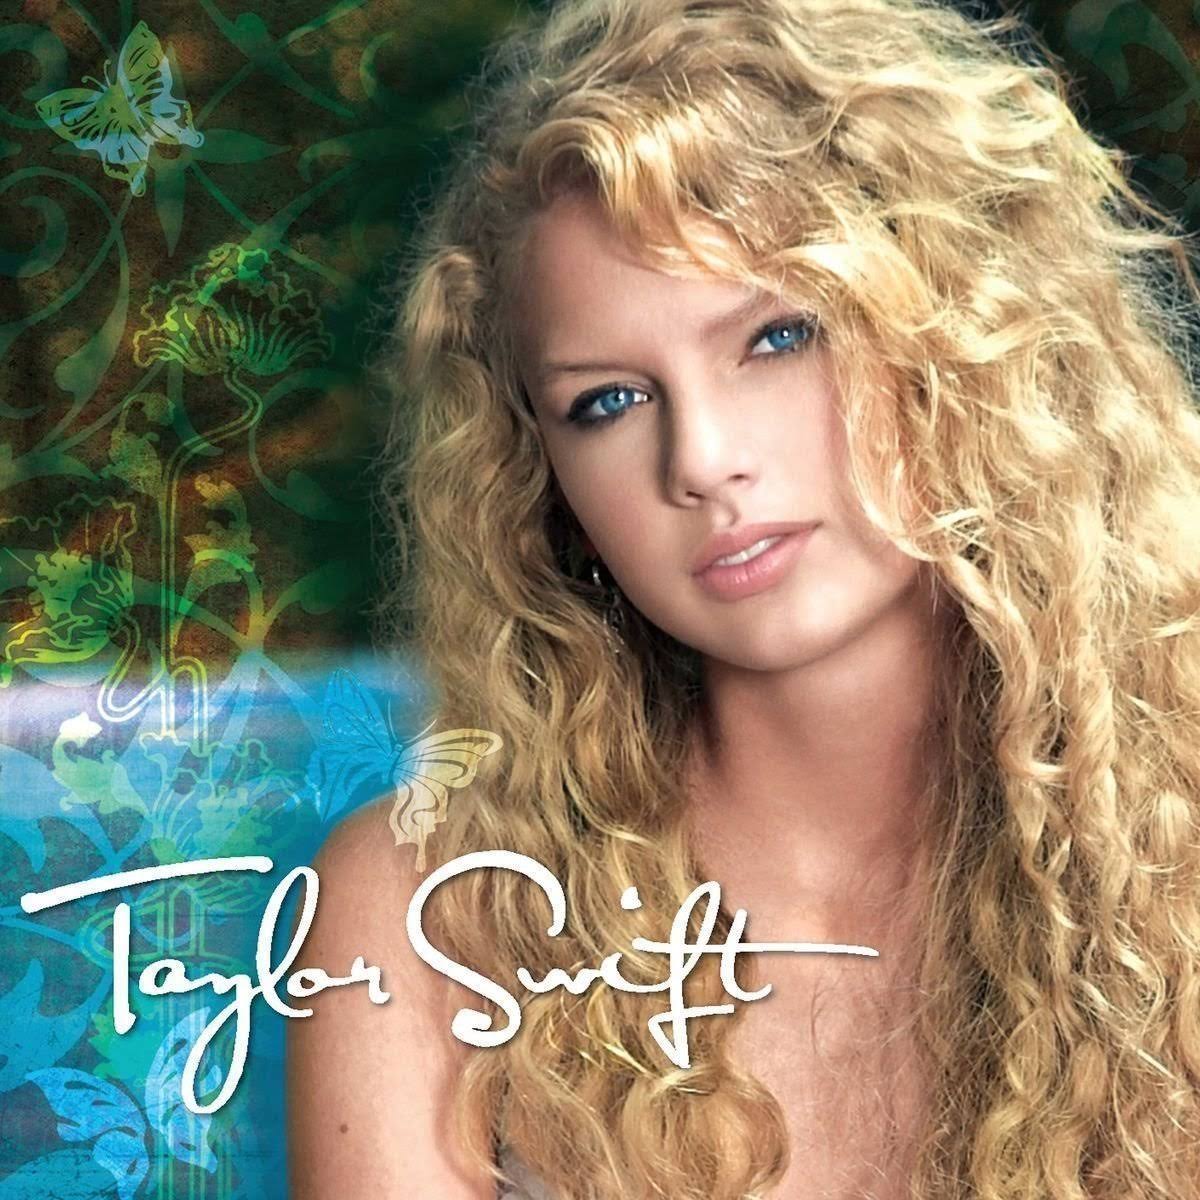 Taylor Swift - Taylor Swift Vinyl LP